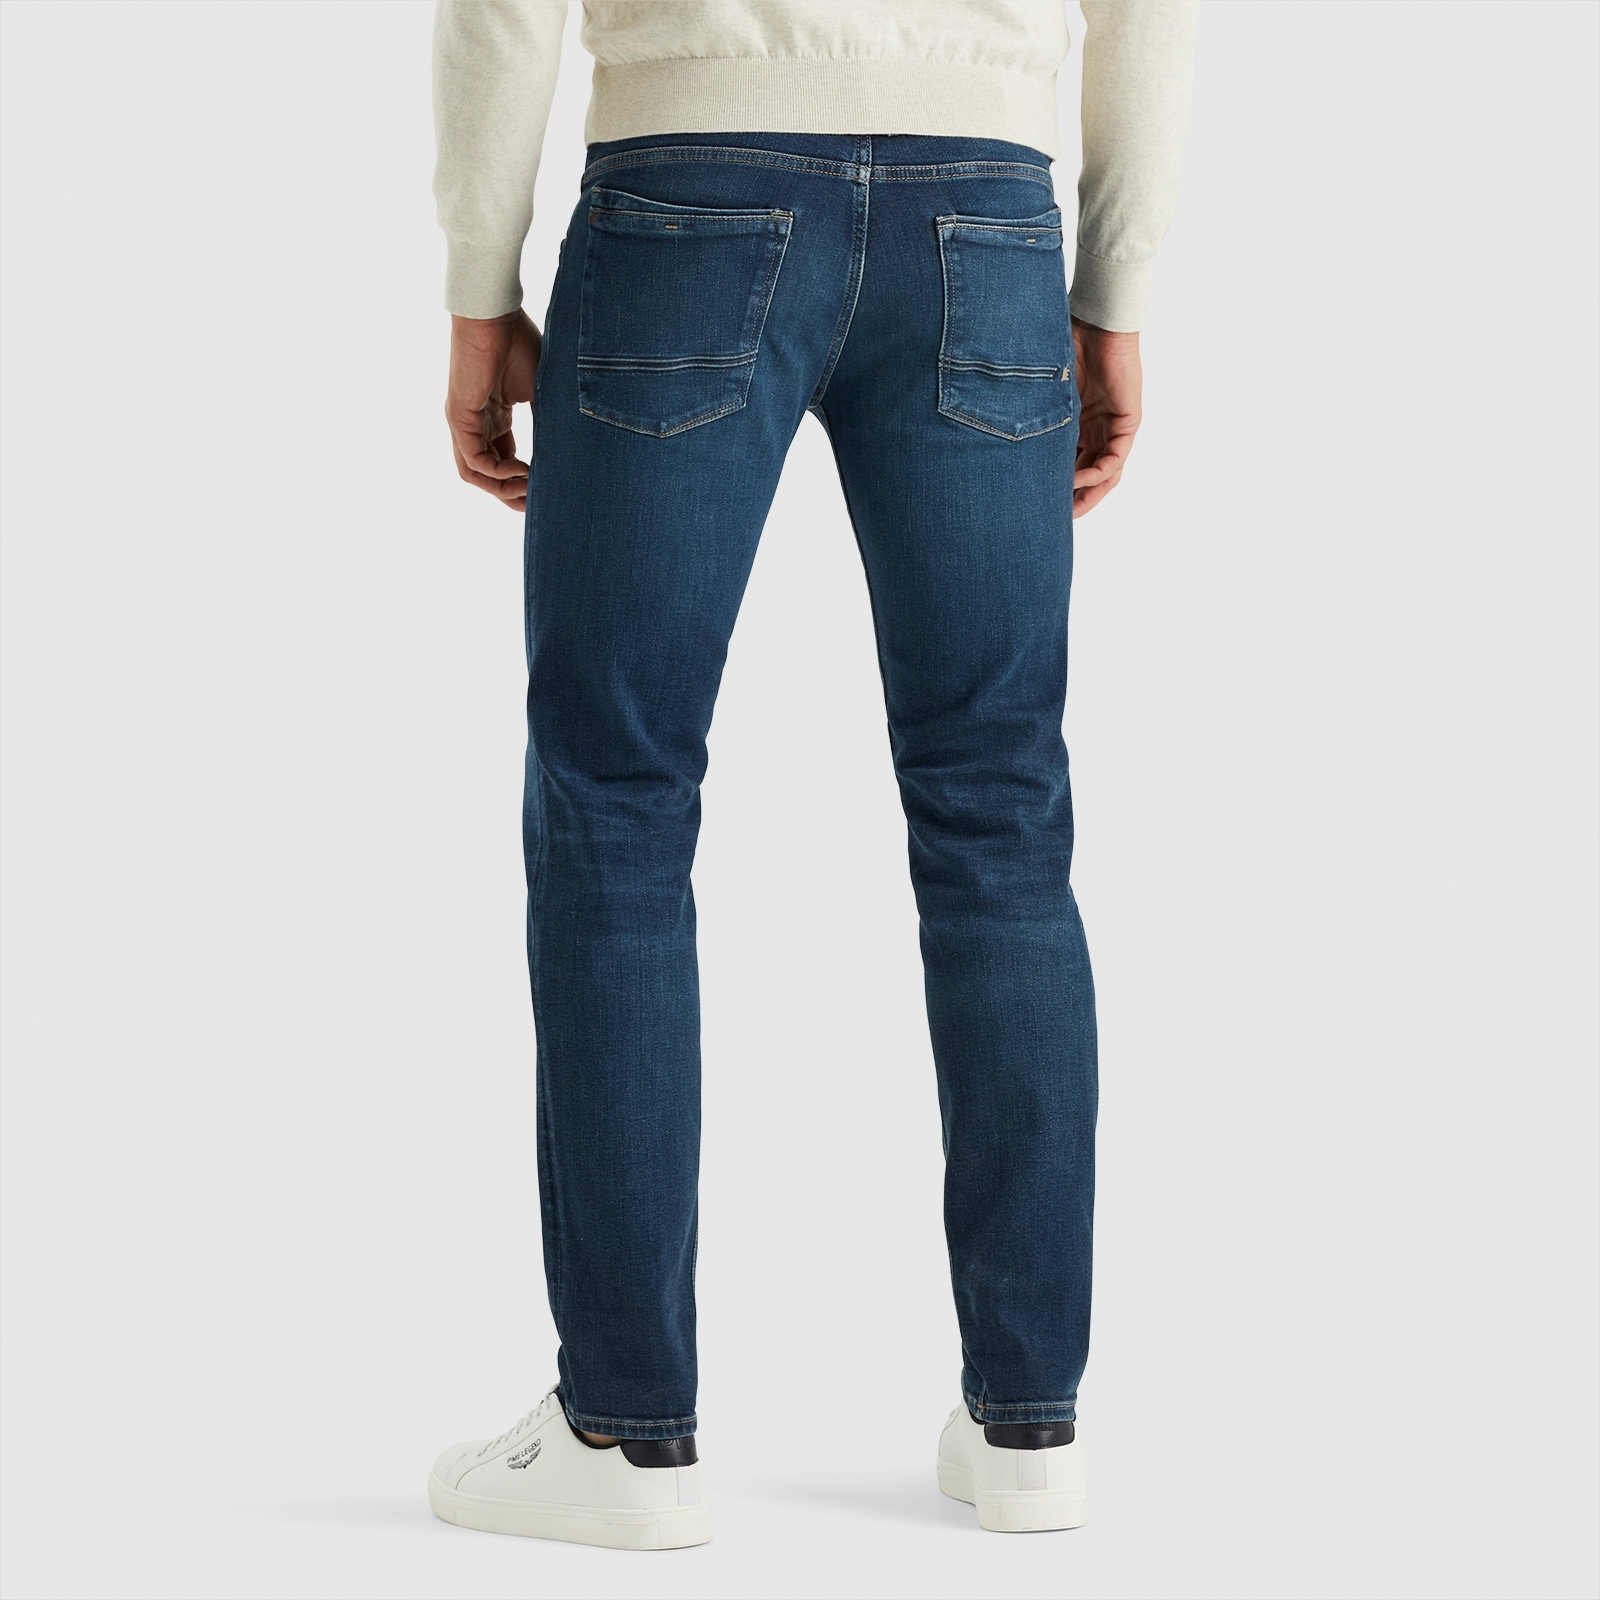 PME LEGEND Straight-Jeans »Commander 3.0«